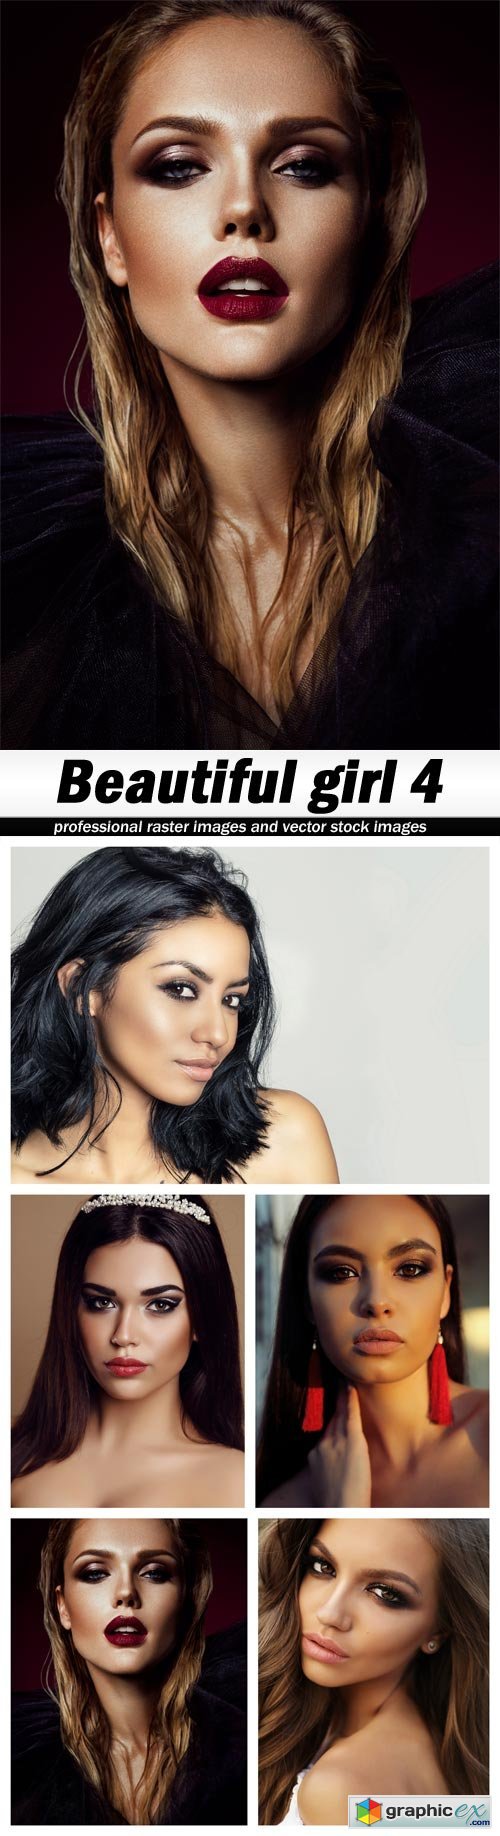 Beautiful girl 4 - 5 UHQ JPEG